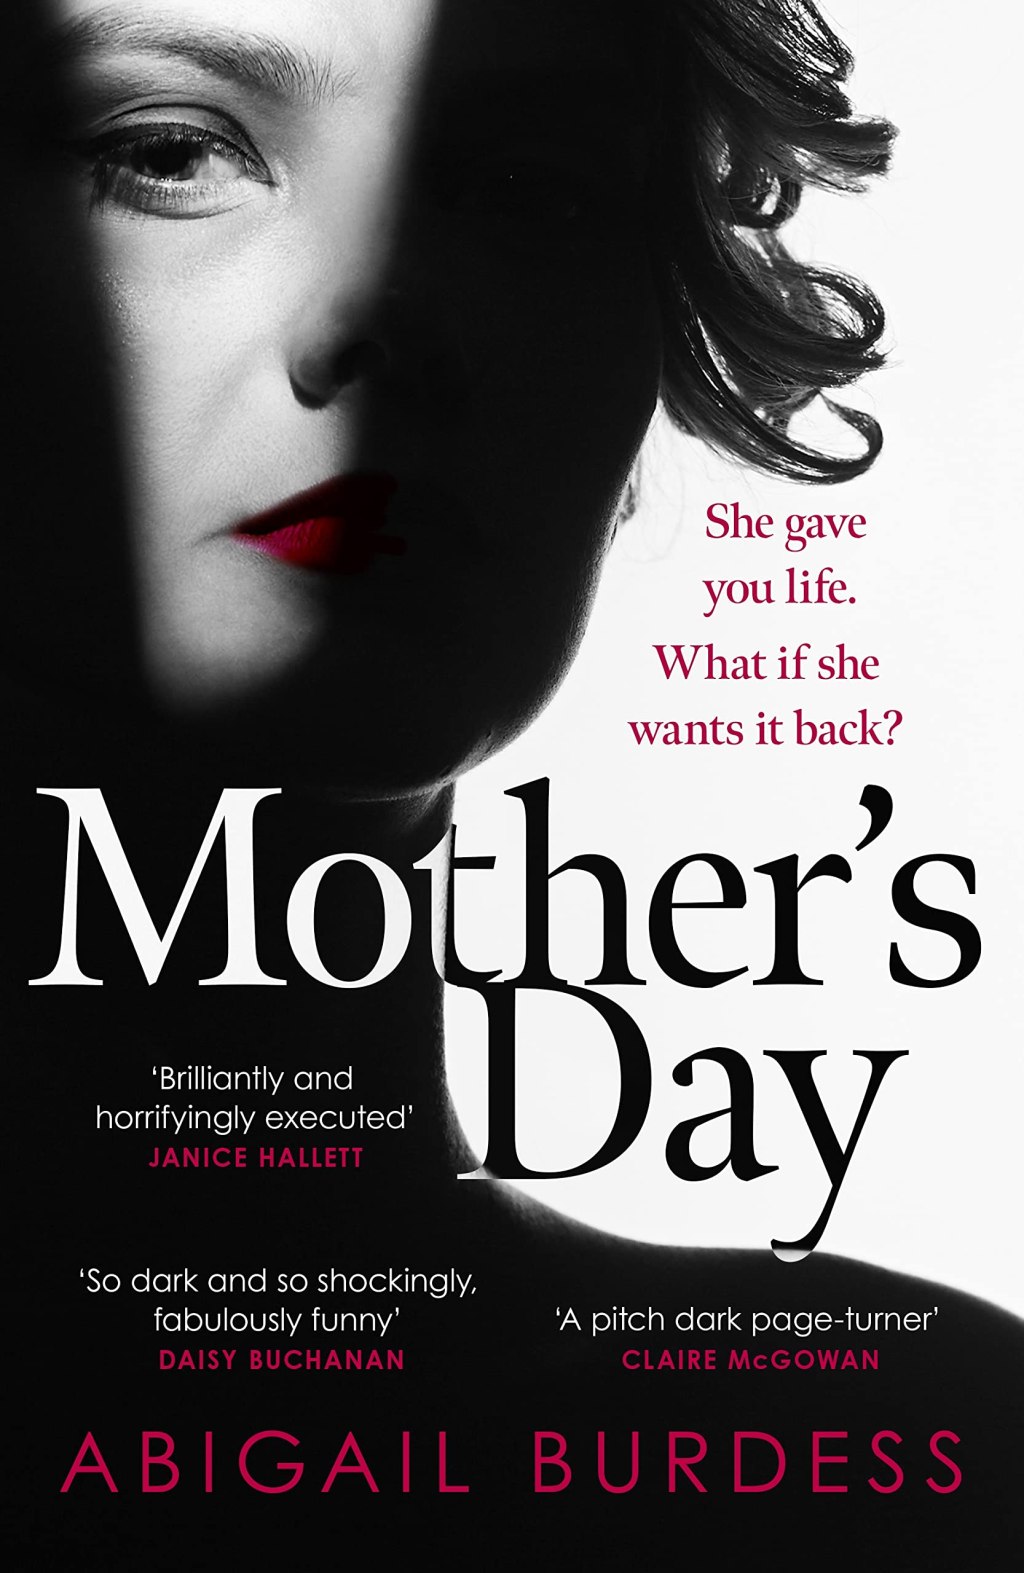 Mother’s Day by Abigail Burdess @AbigailBurdess @RandomTTours @headlinepg @Wildfirebks #MothersDay #BookTwitter #AD-PR #Bookbloggers